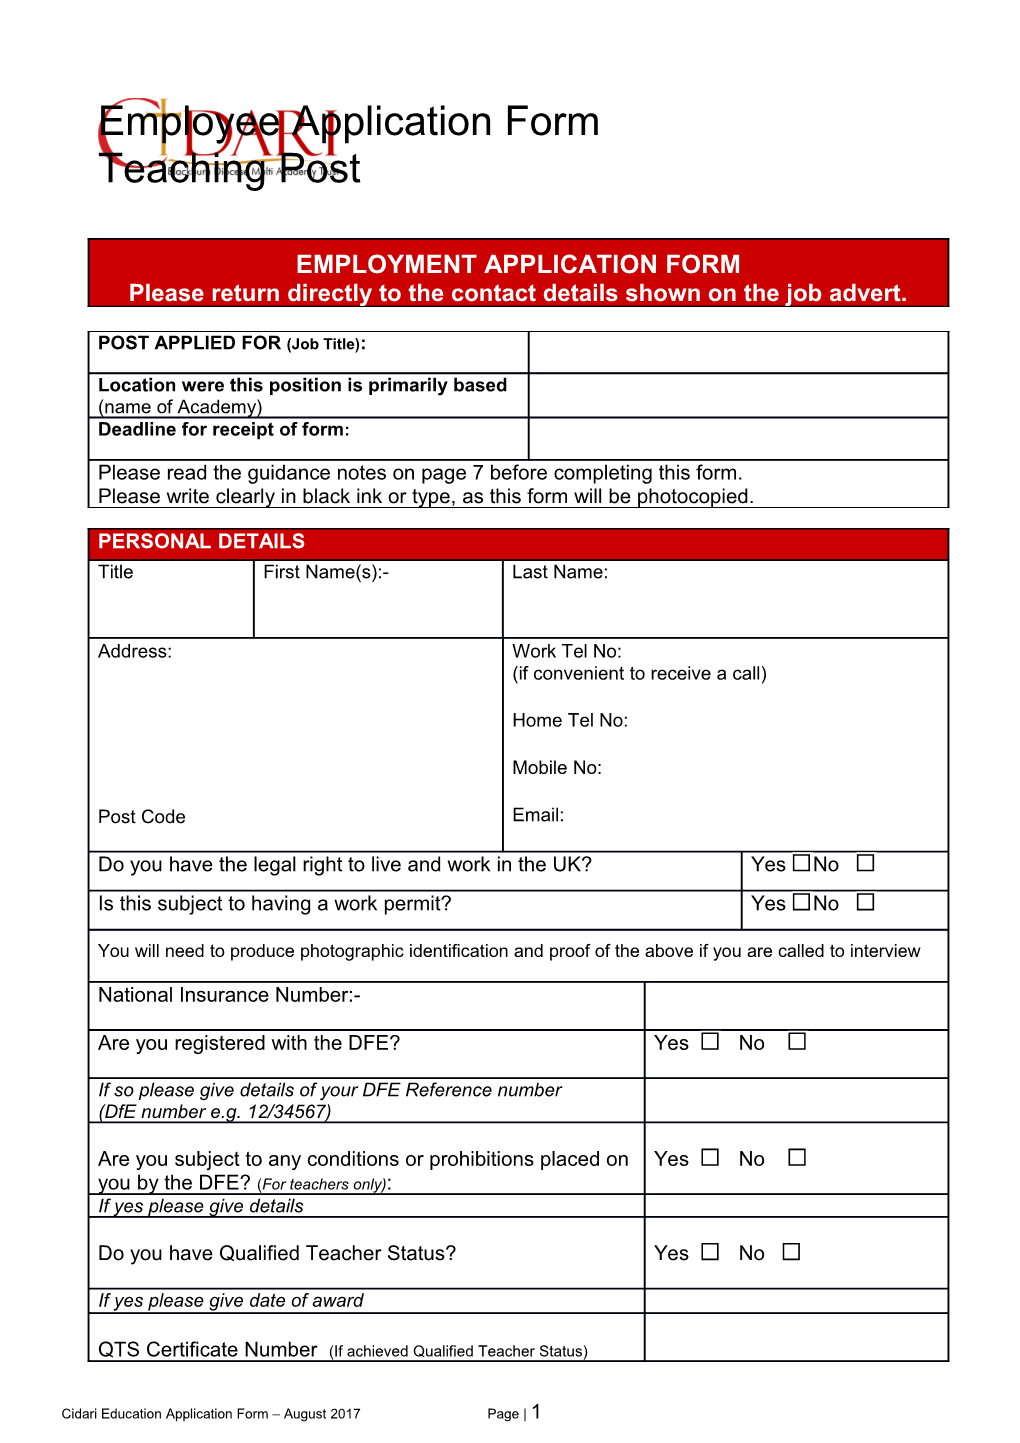 Cidari Education Application Form August 2017 Page 1